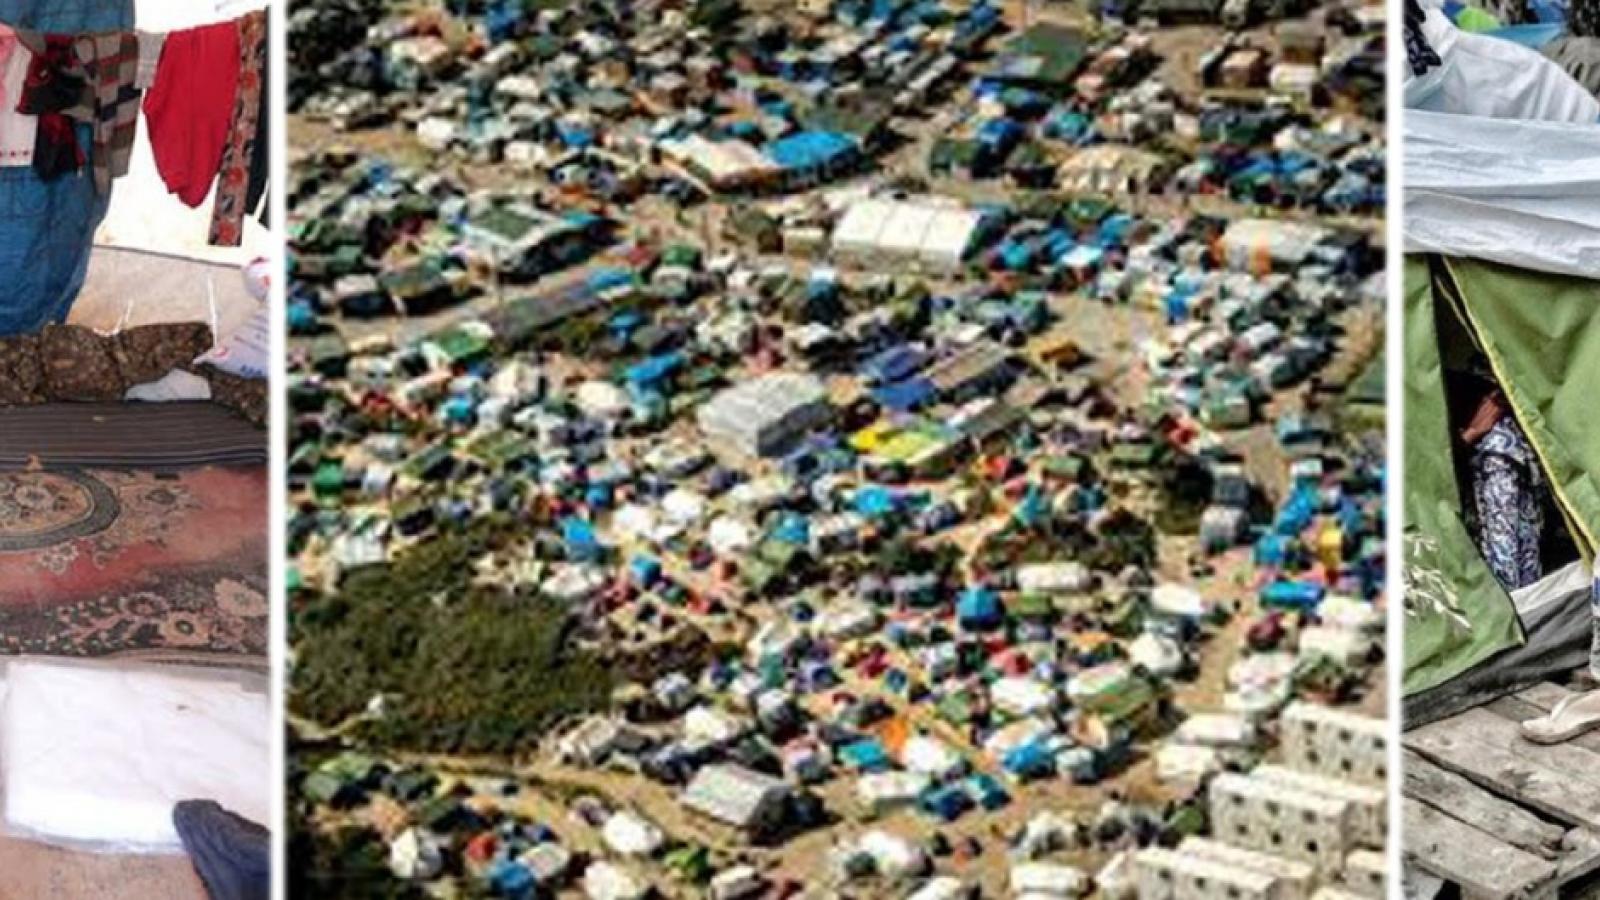 Refugee camps spread